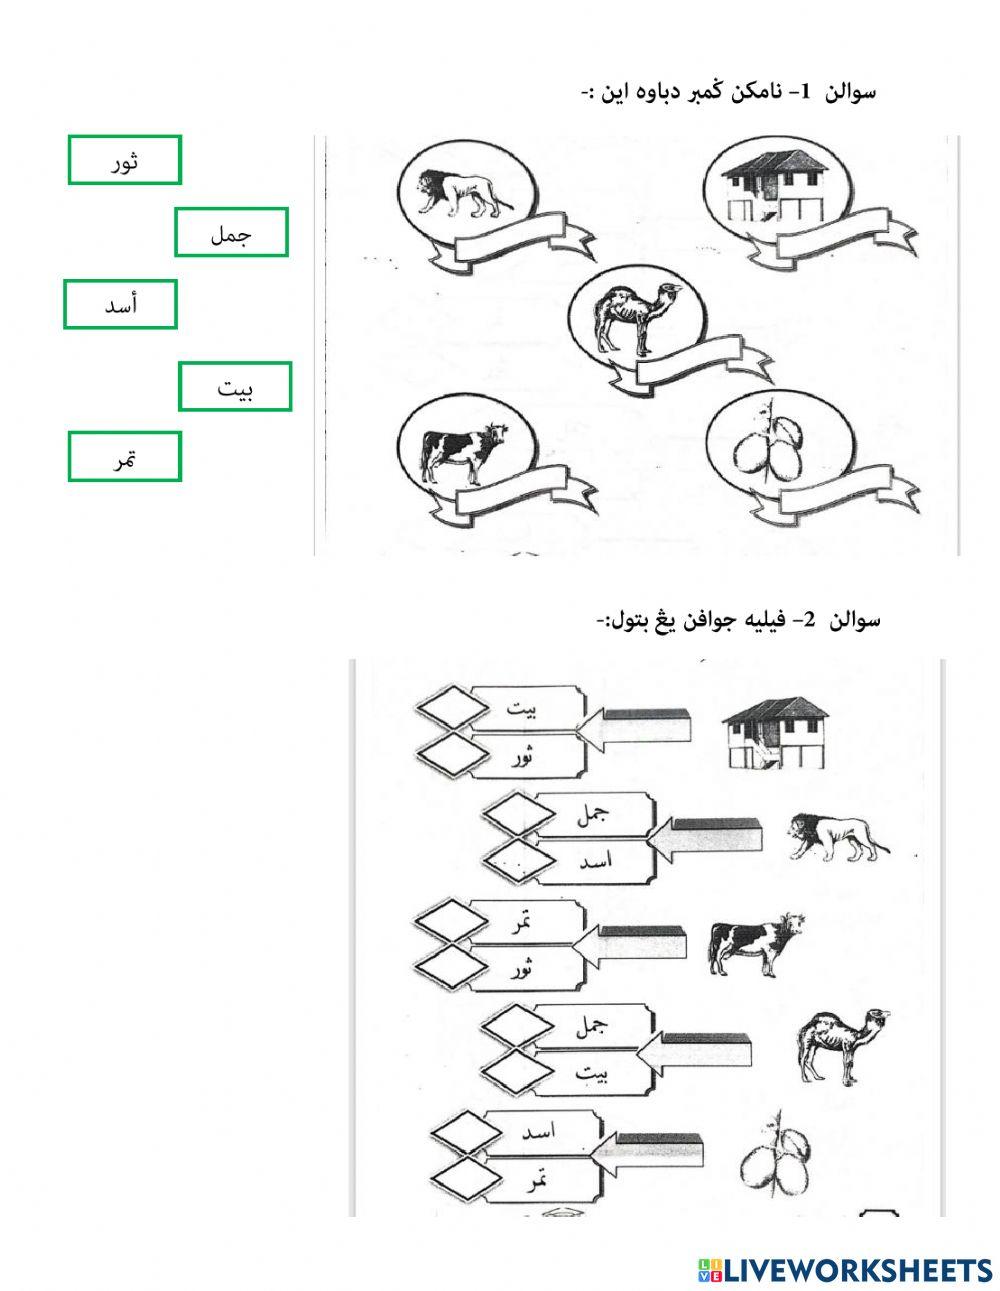 Ulangkaji bahasa arab dh pra